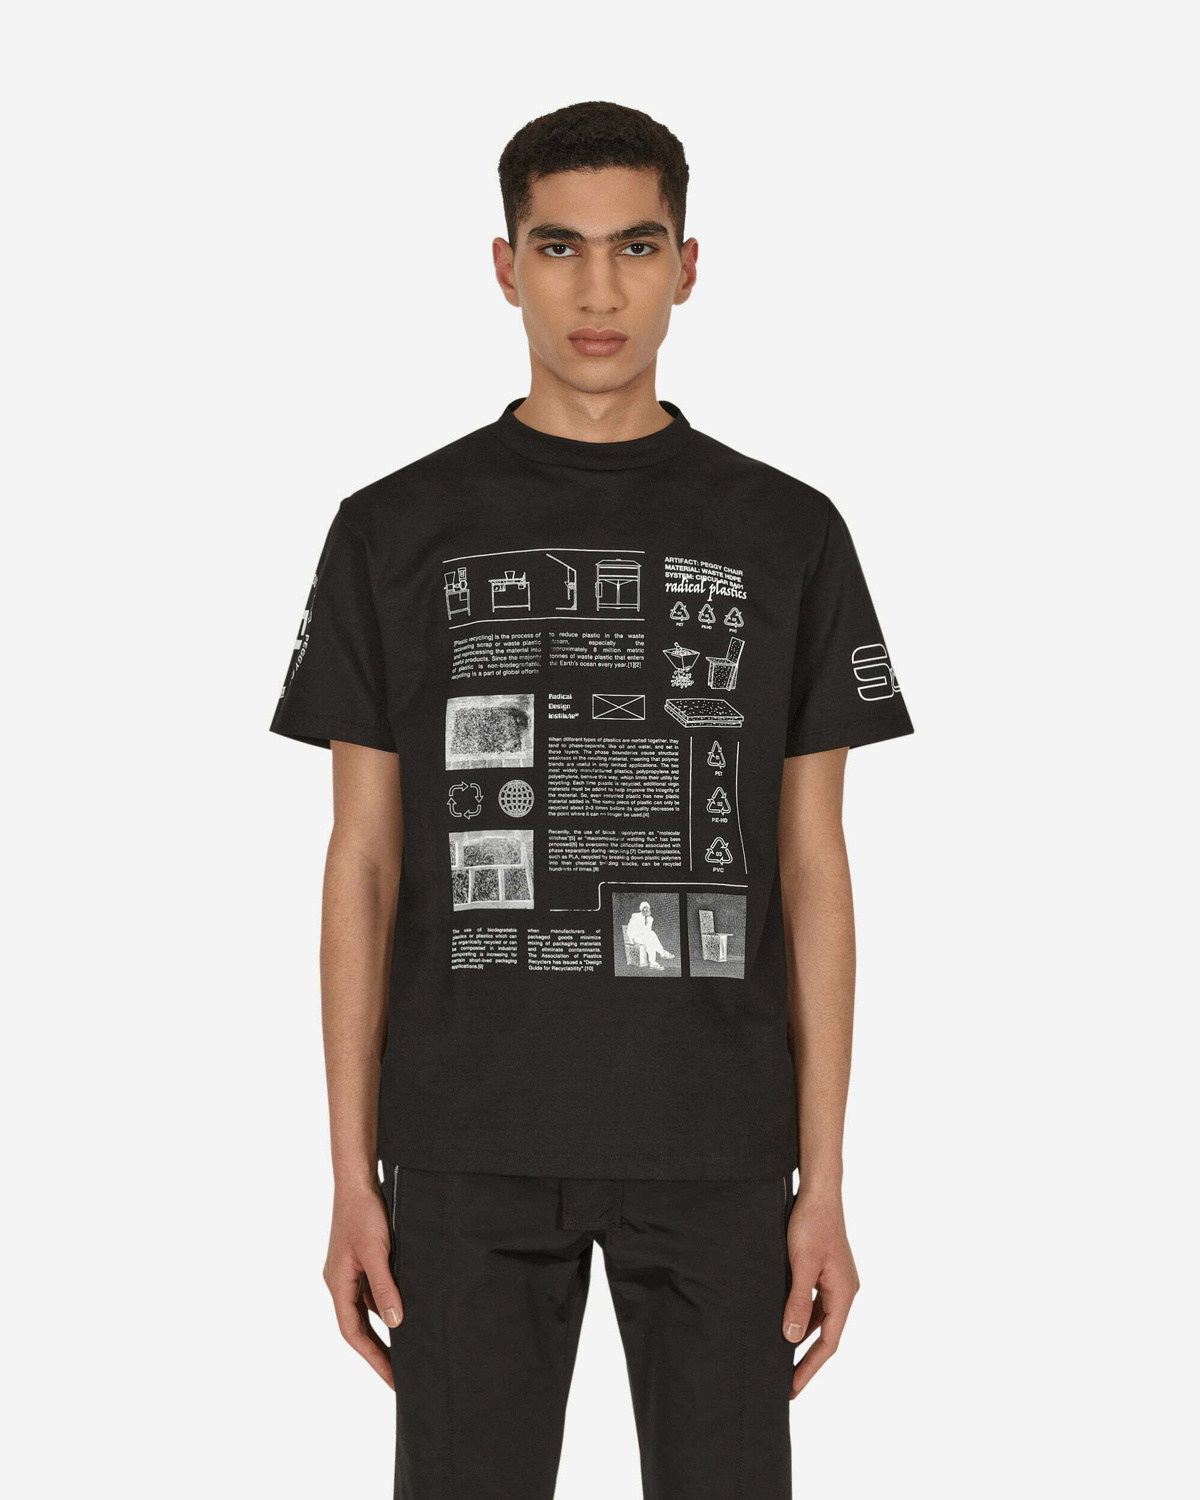 PEGGY GOU Essential T-Shirt for Sale by ZacharyJone